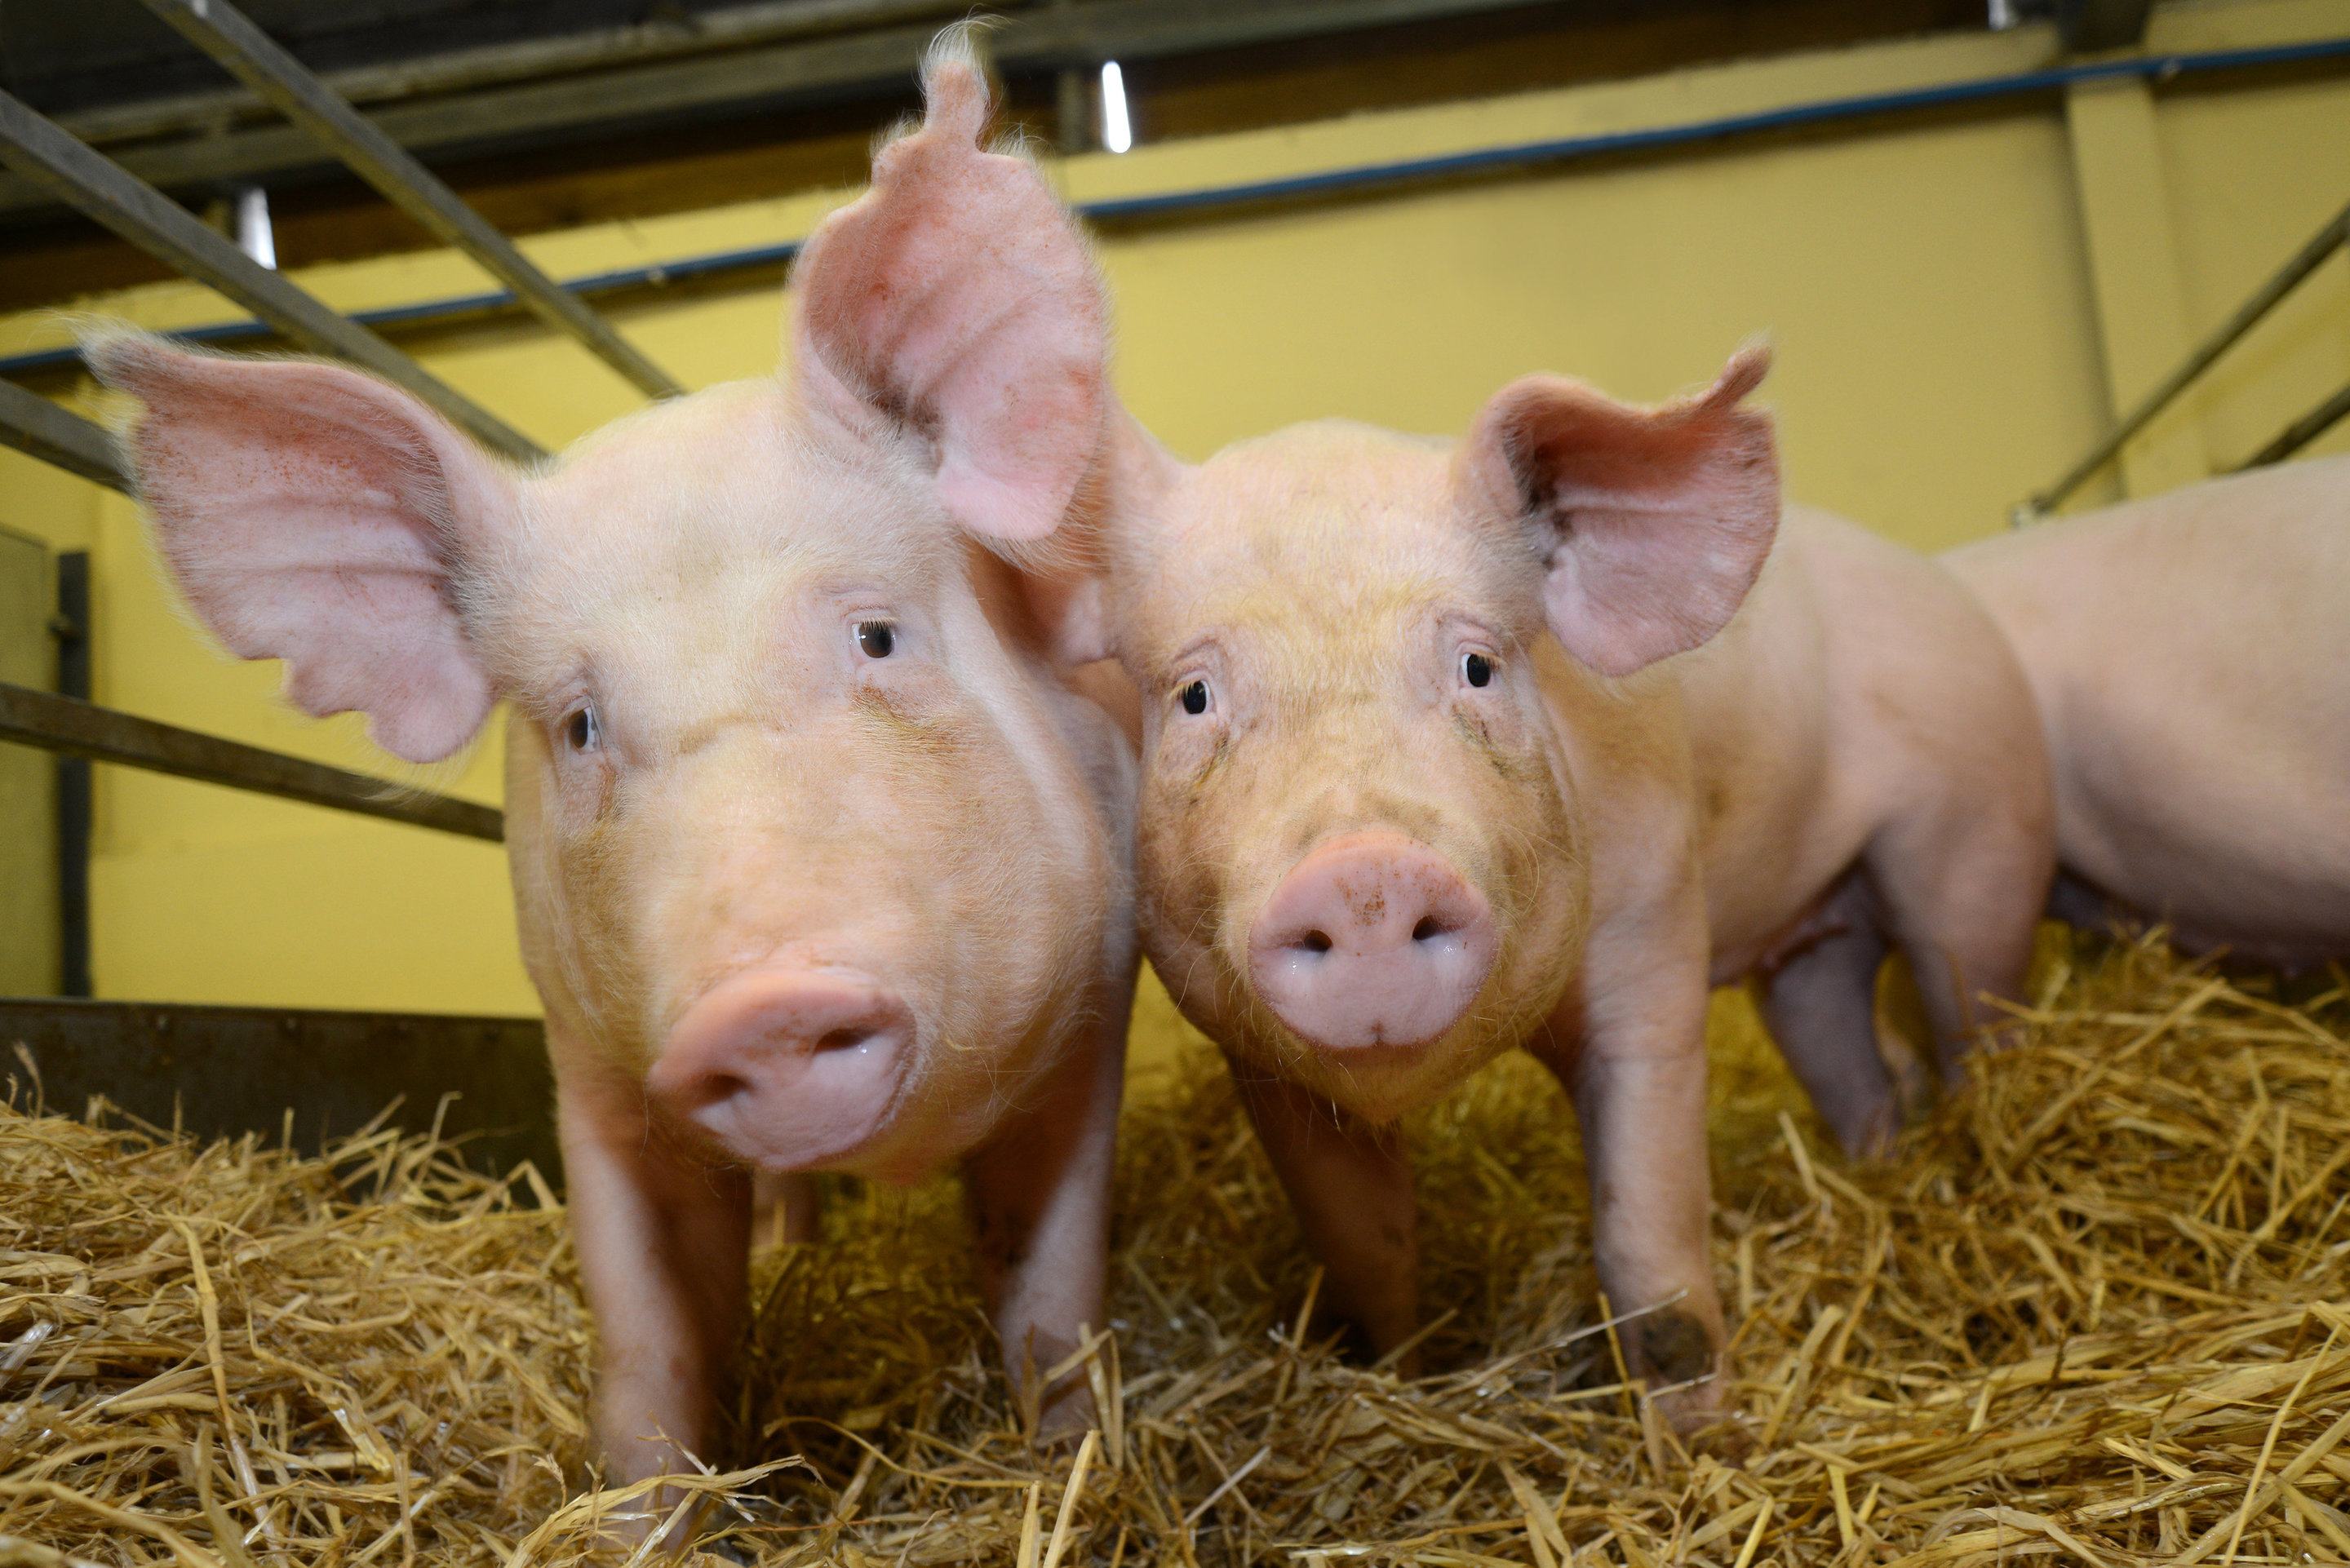 Gene-edited pigs are resistant to billion-dollar virus